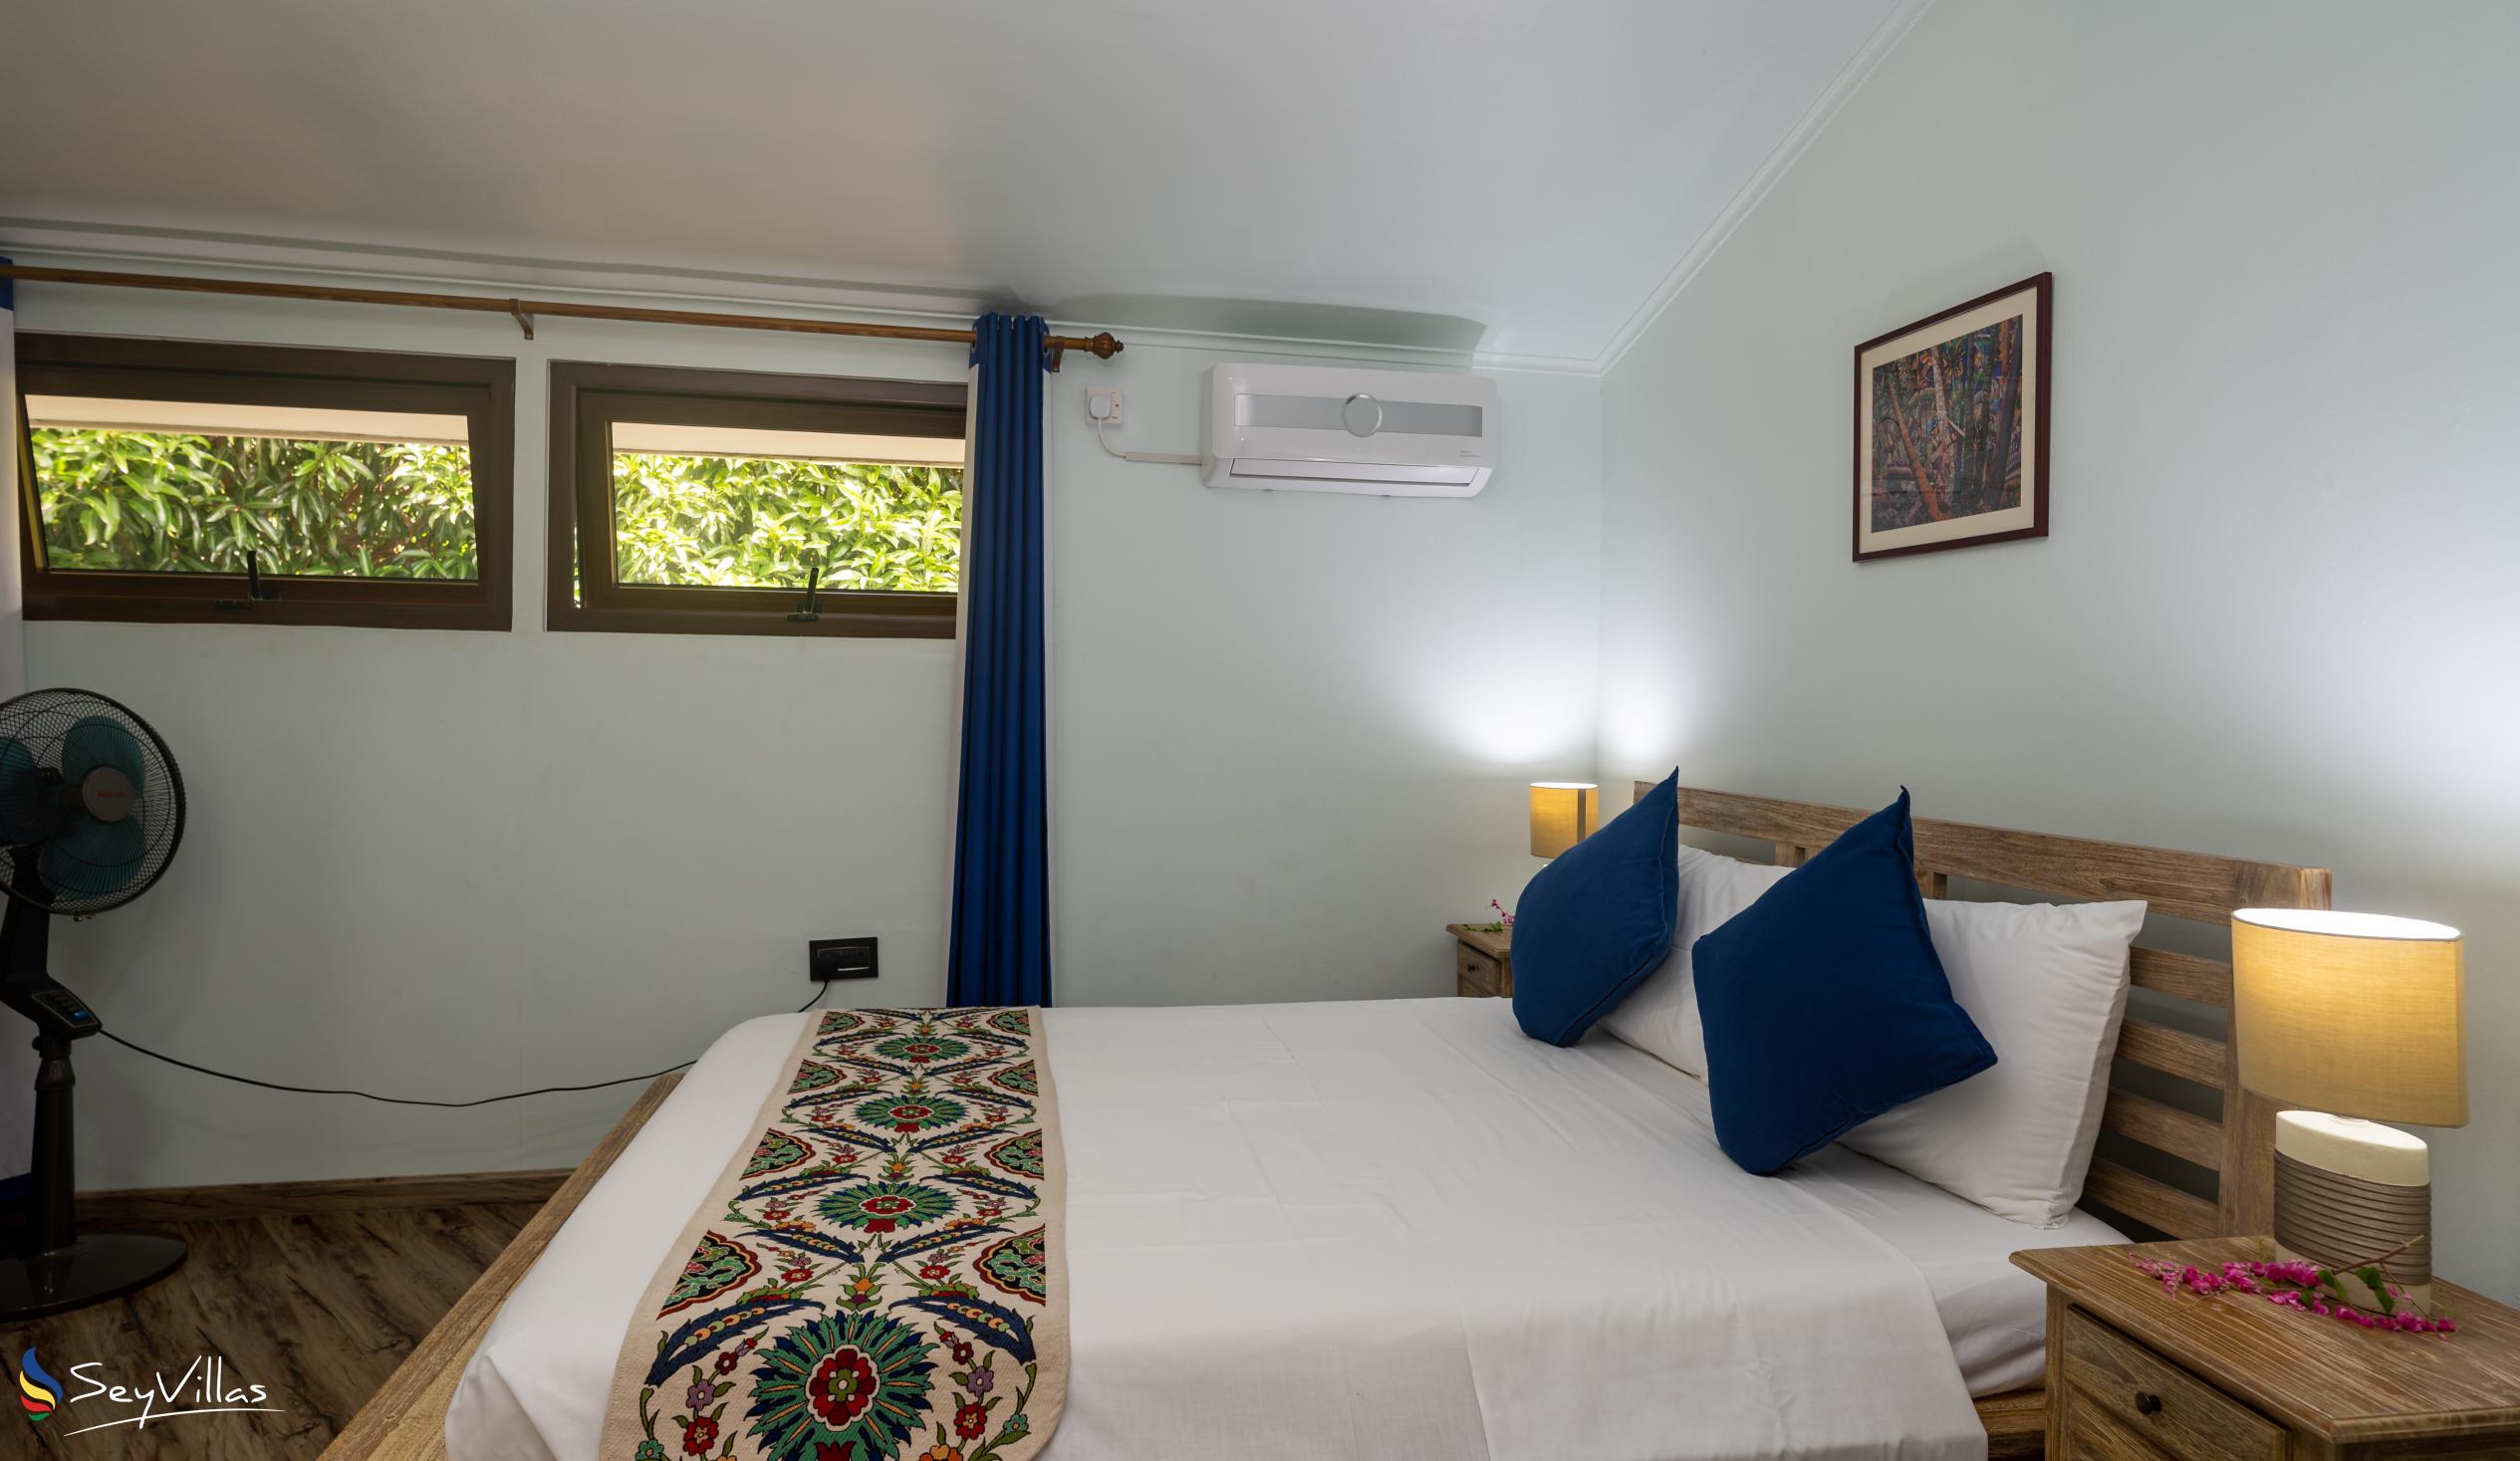 Photo 72: Cap-Sud Self Catering - 3-Bedroom Apartment - Mahé (Seychelles)